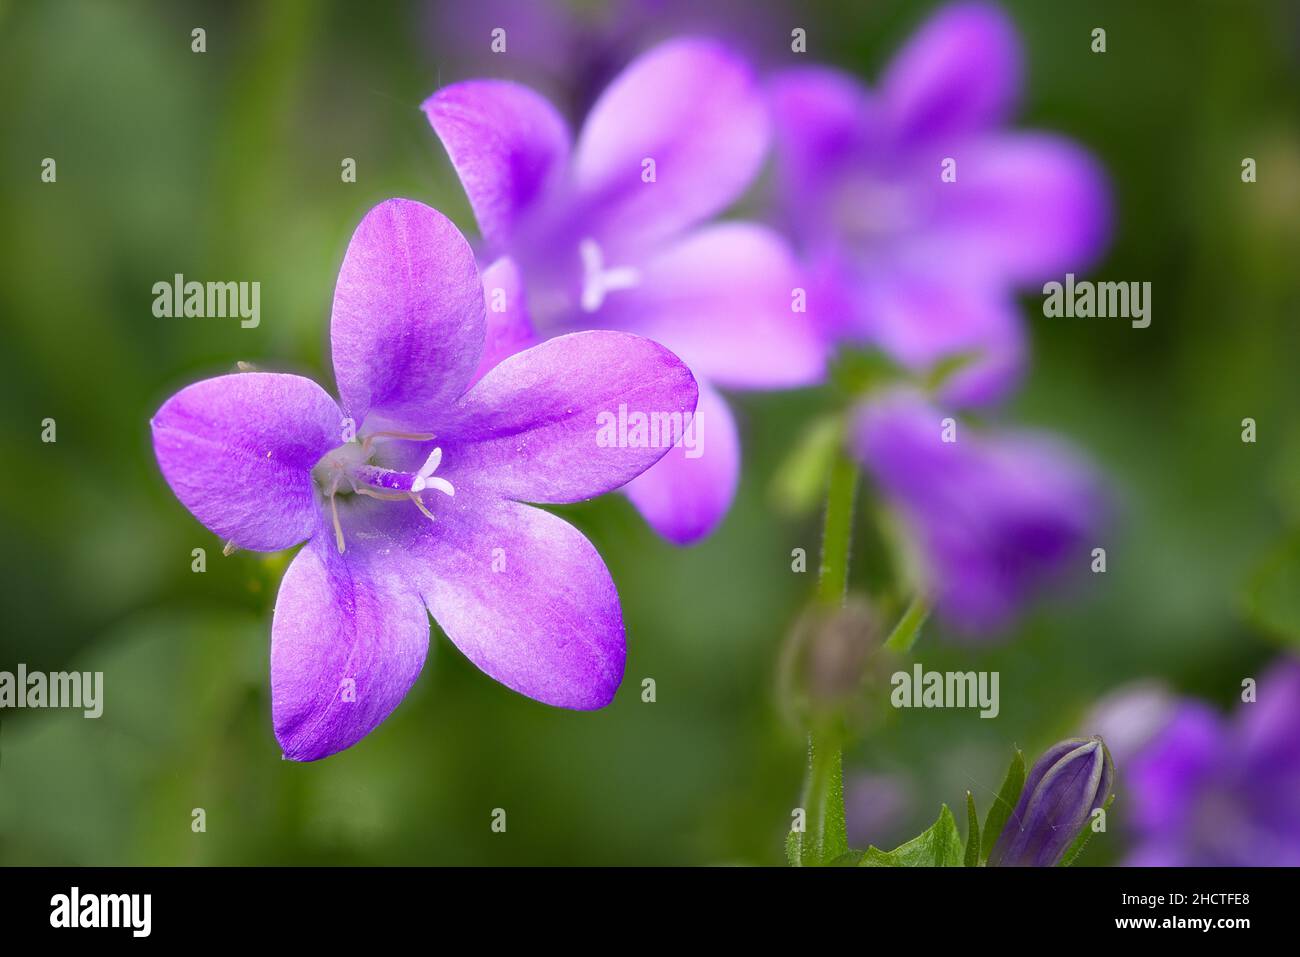 Closeup shot of Viola Riviniana flowers on blurred background Stock Photo